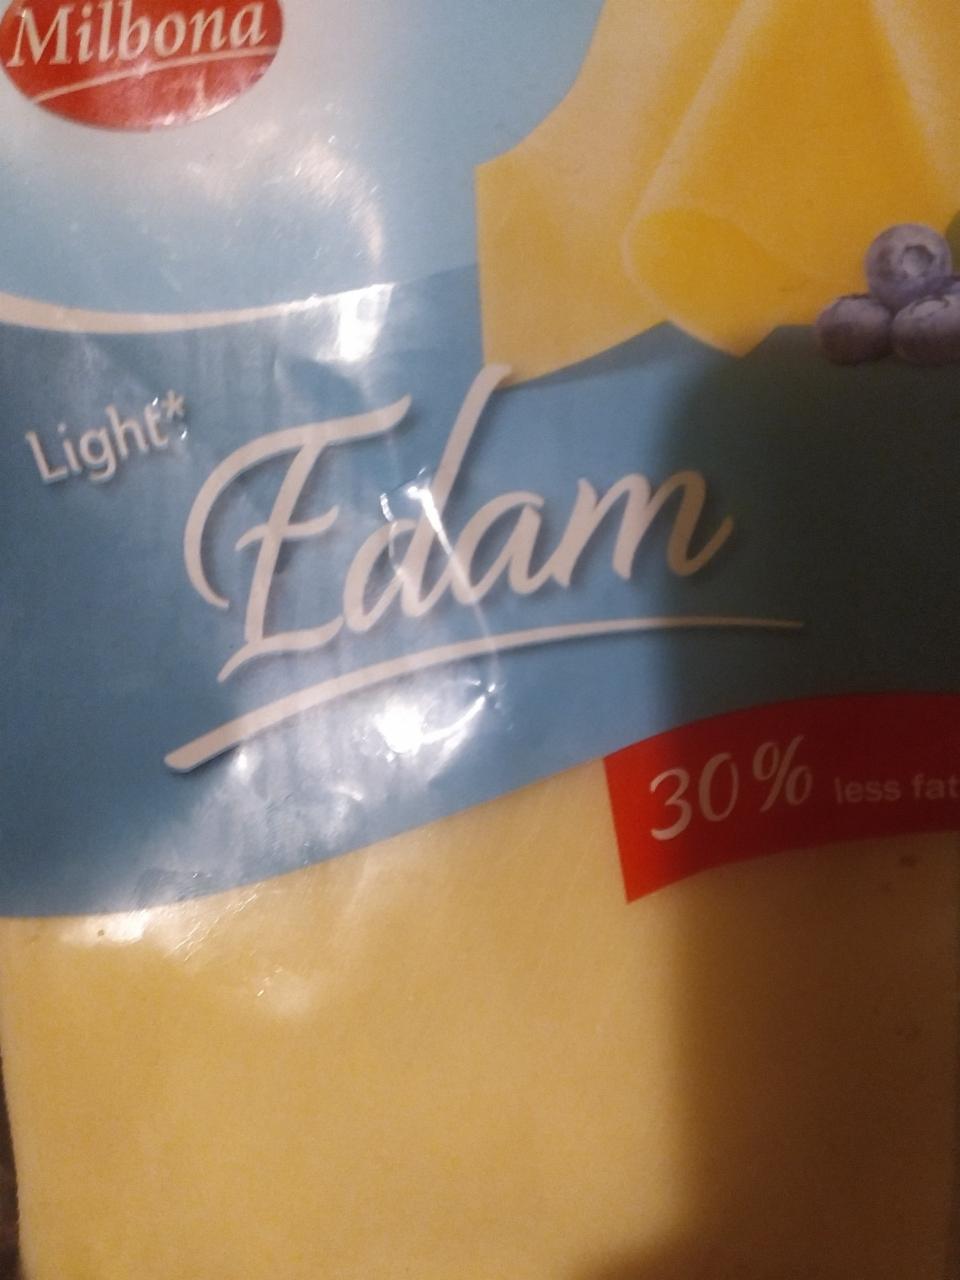 Fotografie - Light Edam 30% less fat Milbona